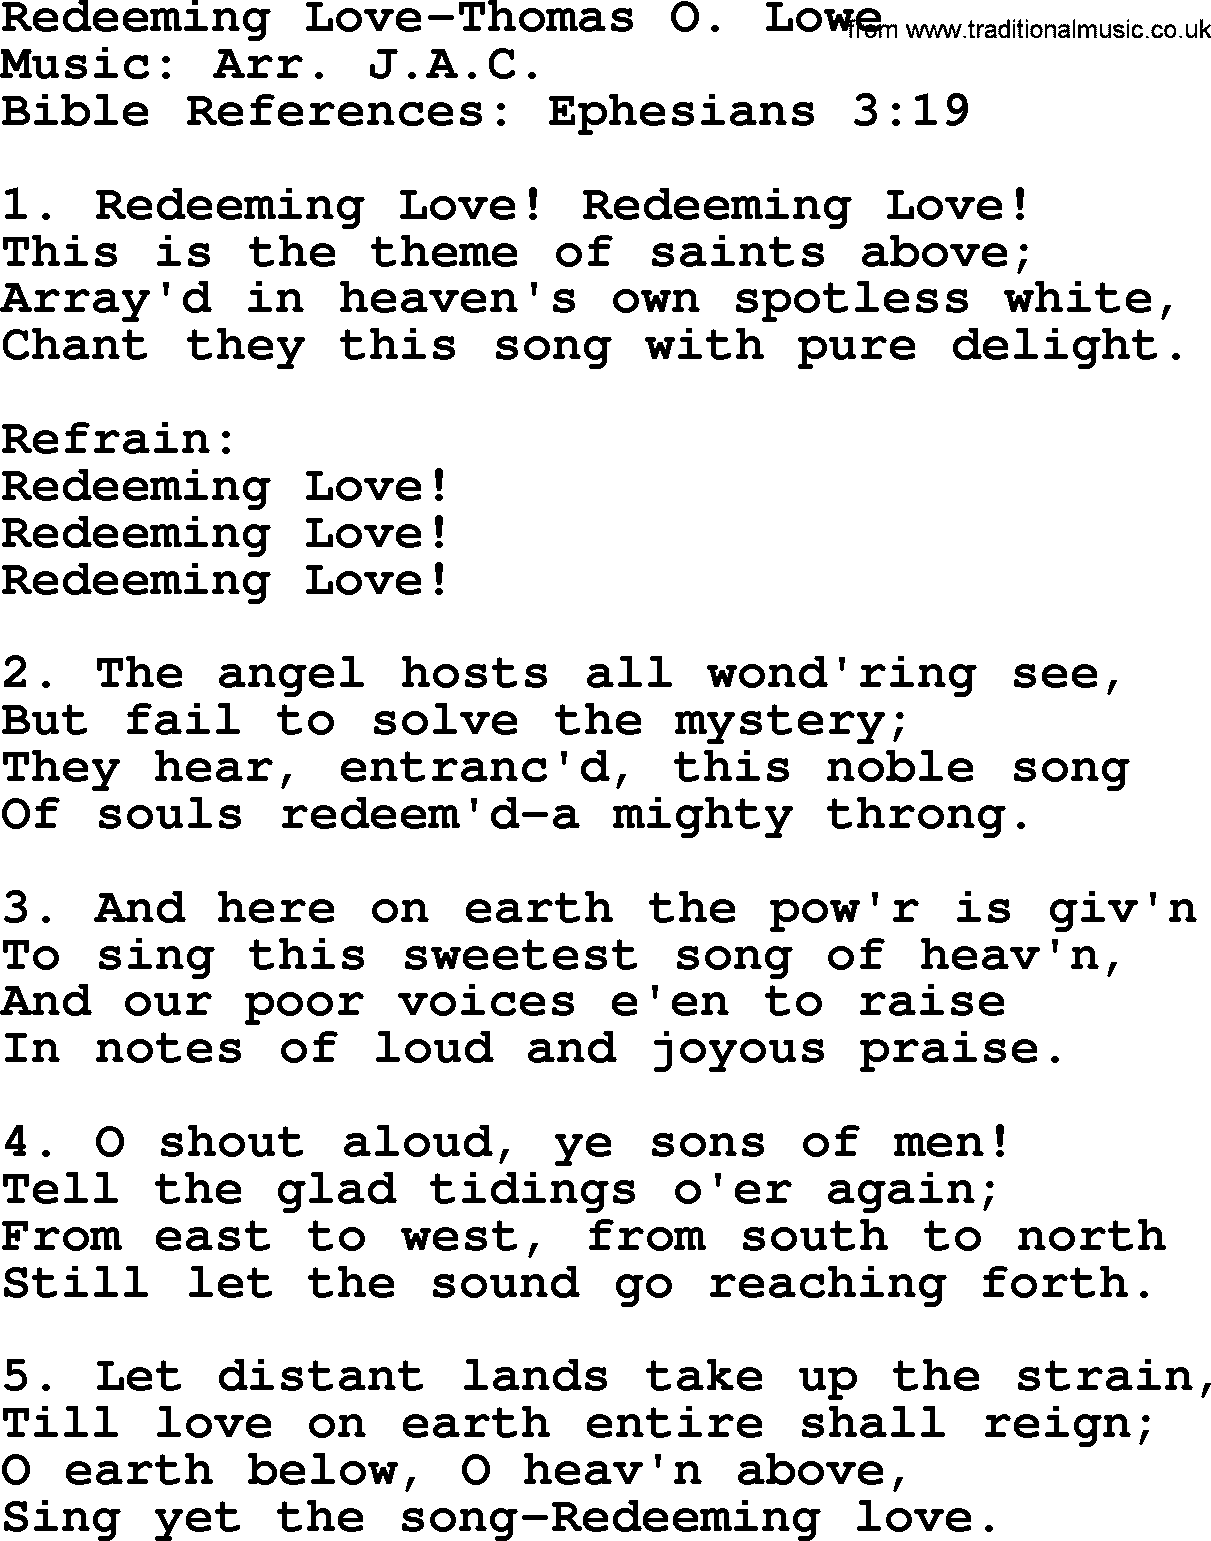 Hymns about Angels, Hymn: Redeeming Love-thomas O. Lowe.txt lyrics with PDF